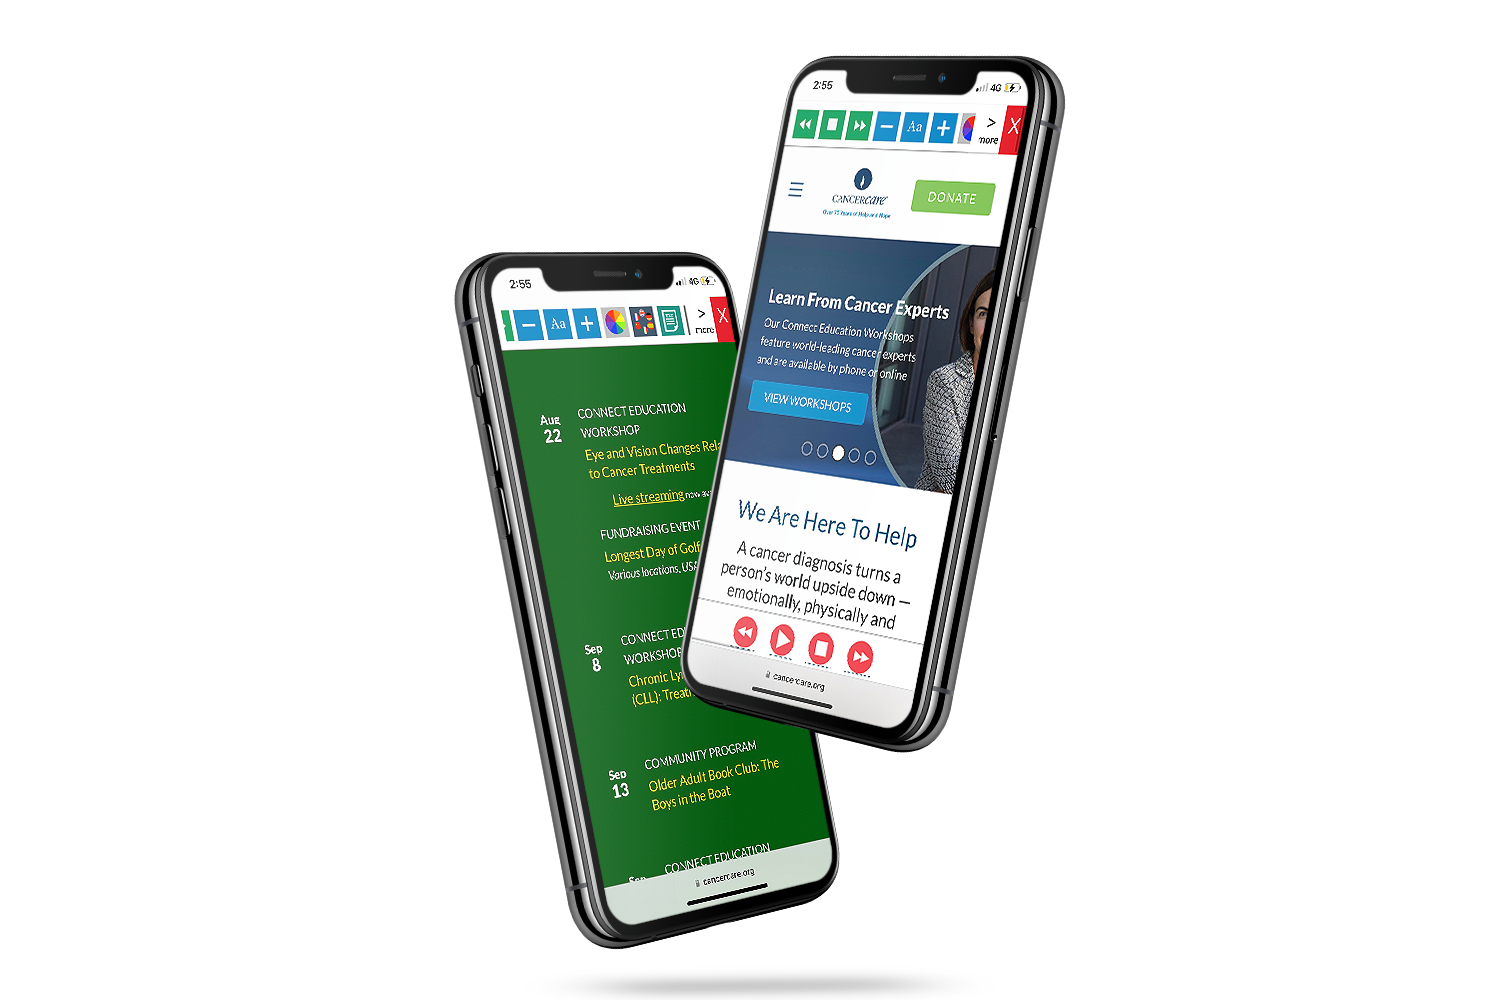 Mobiles with Cancer Care website using the Recite Me assistive toolbar